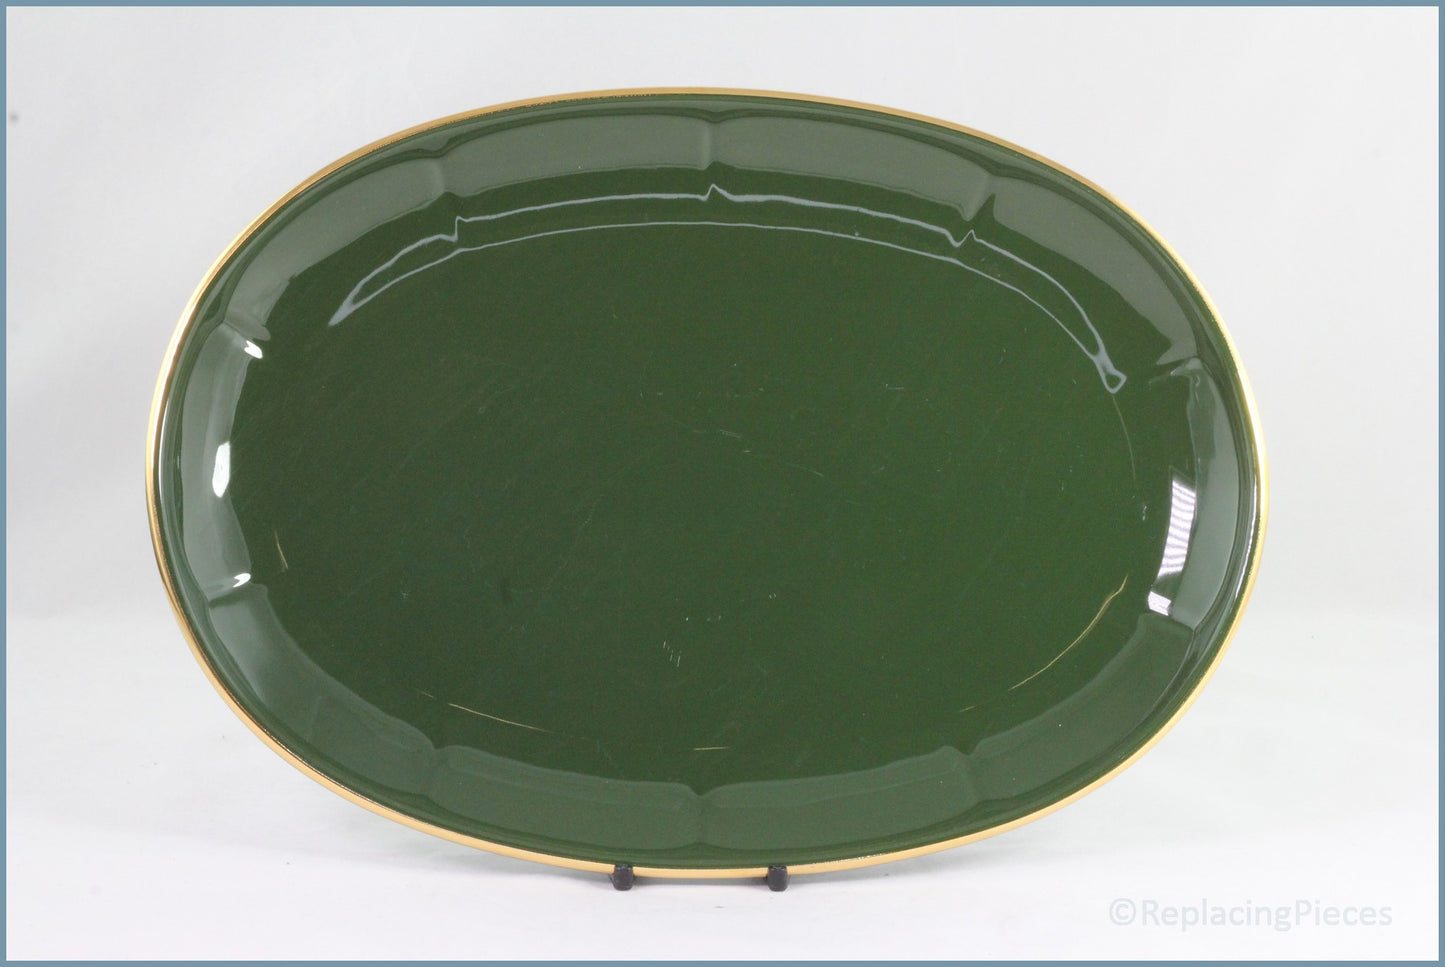 Apilco - Bistro (Green & Gold) - 12 1/8" Oval Platter